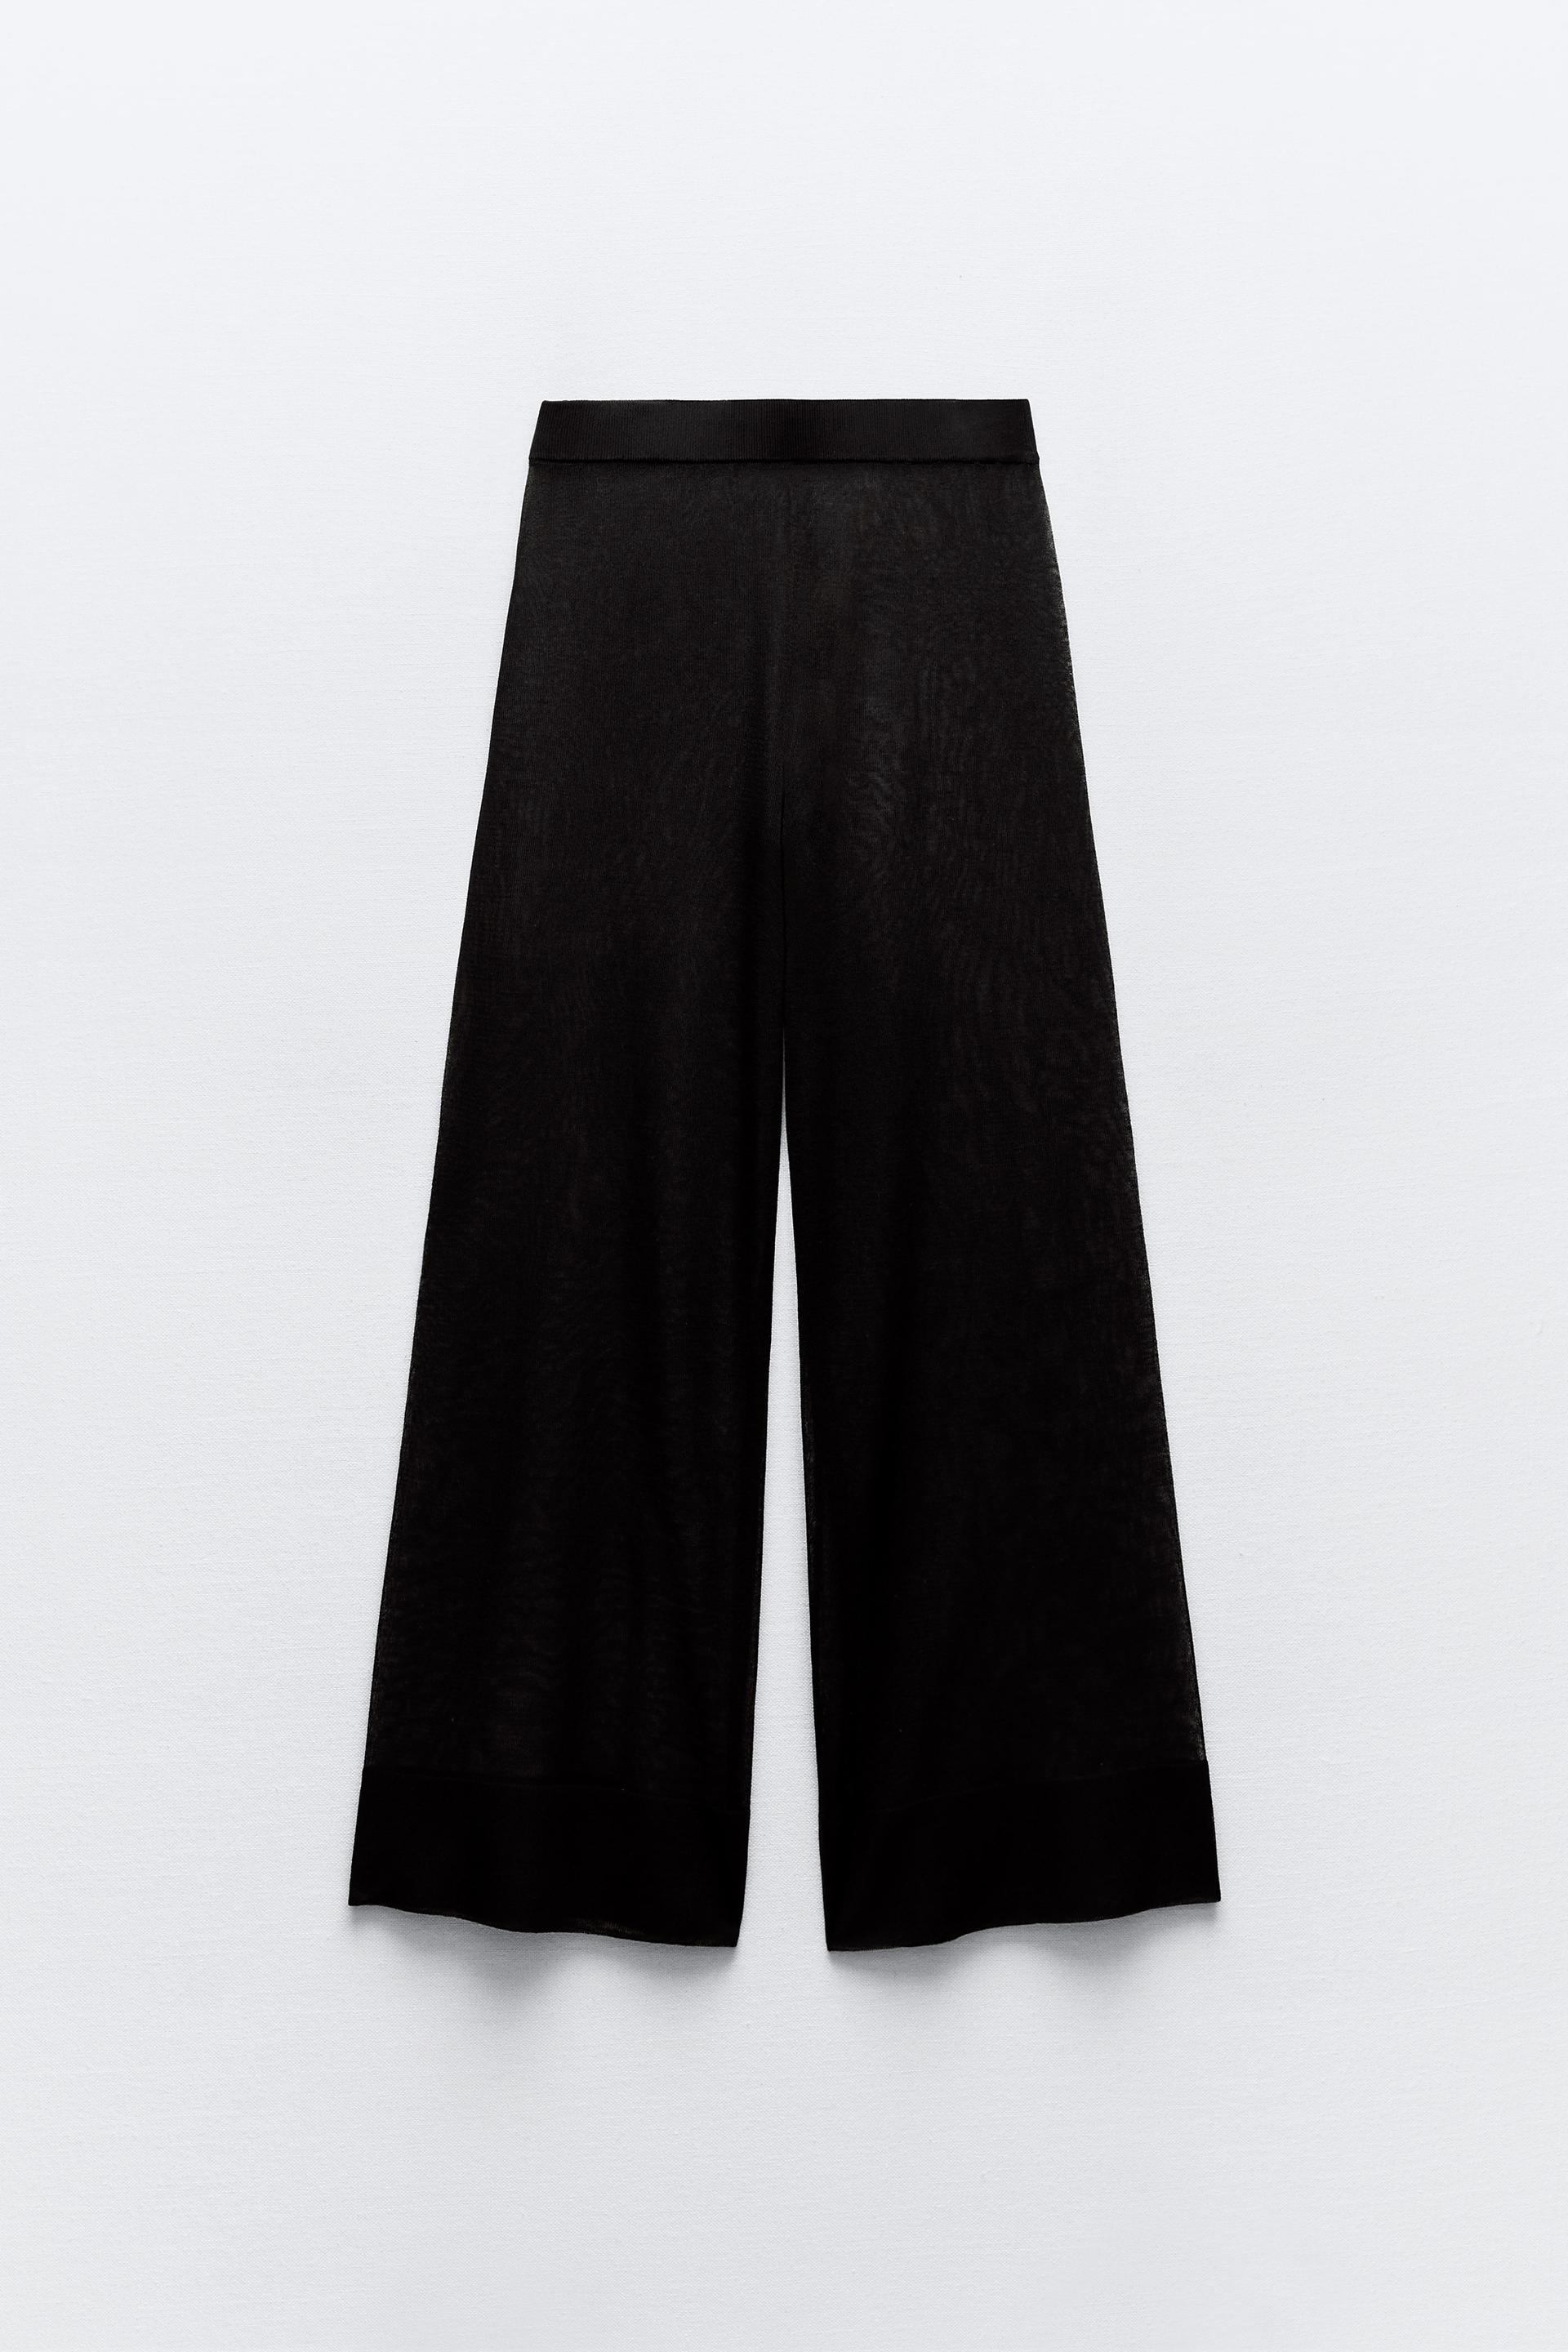 Брюки-кюлоты Zara Knit Semi-sheer, черный брюки кюлоты zara knit semi sheer черный